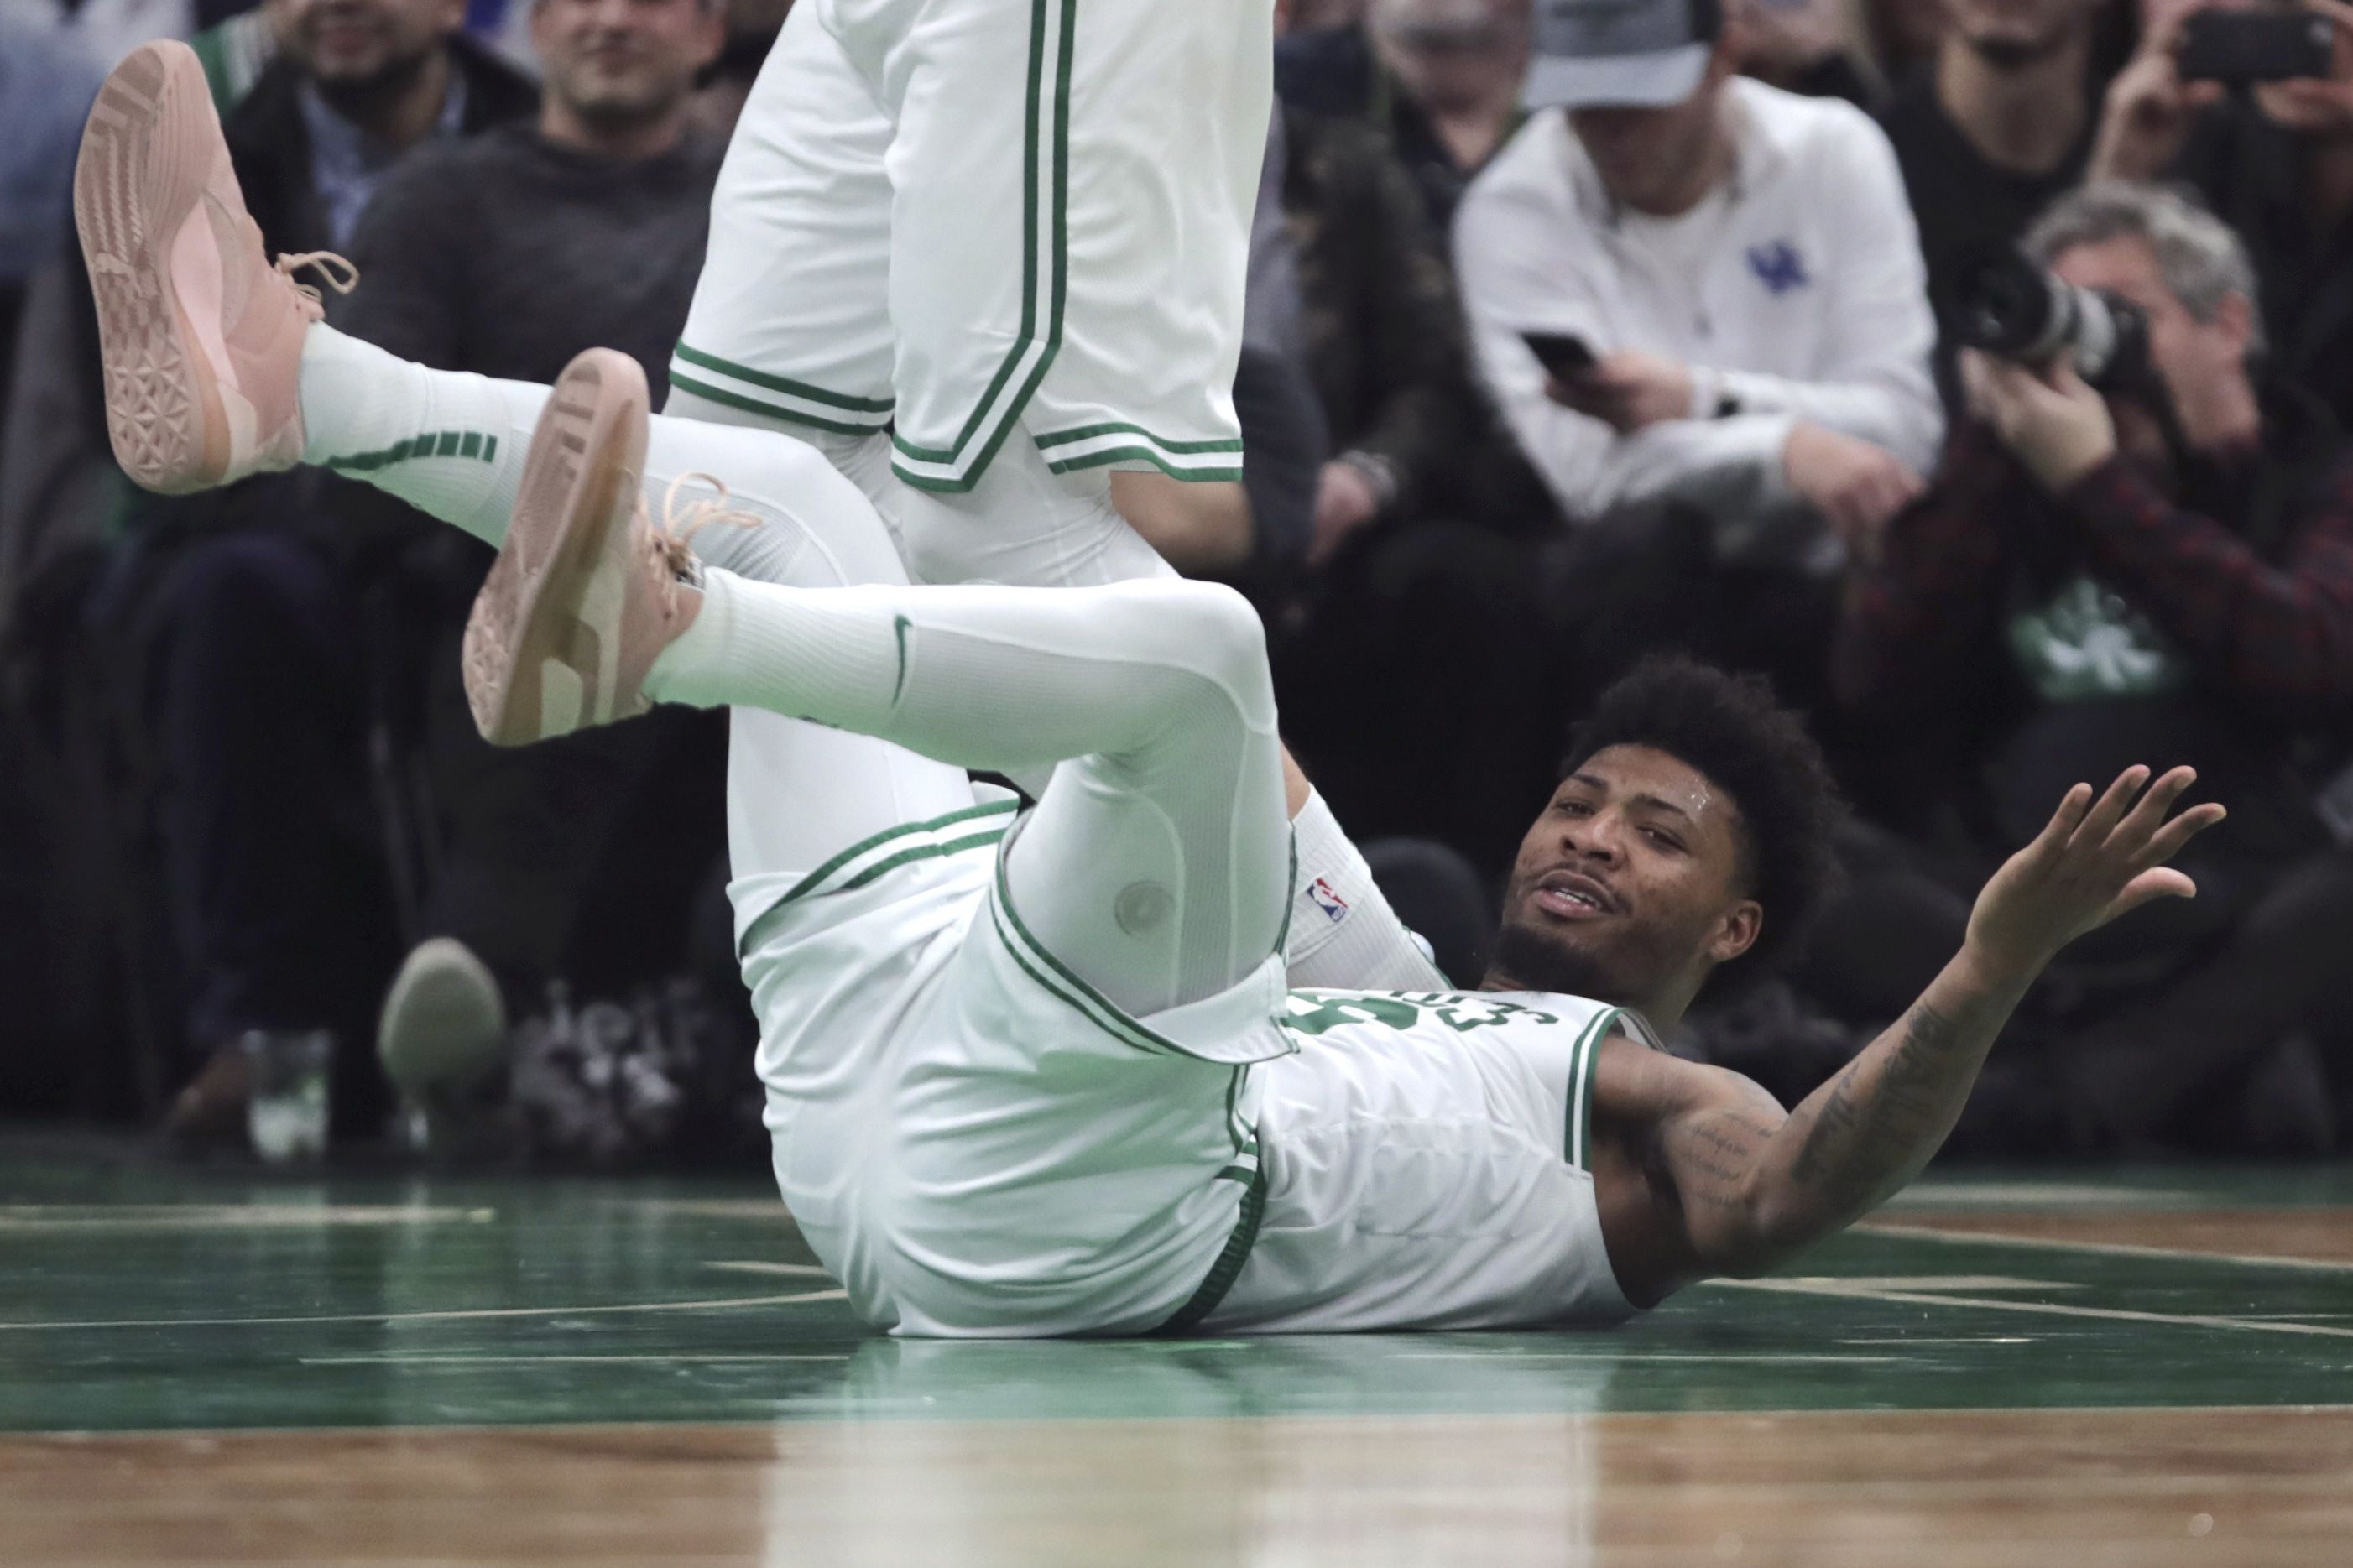 Celtics, minus Walker, bow to Wizards